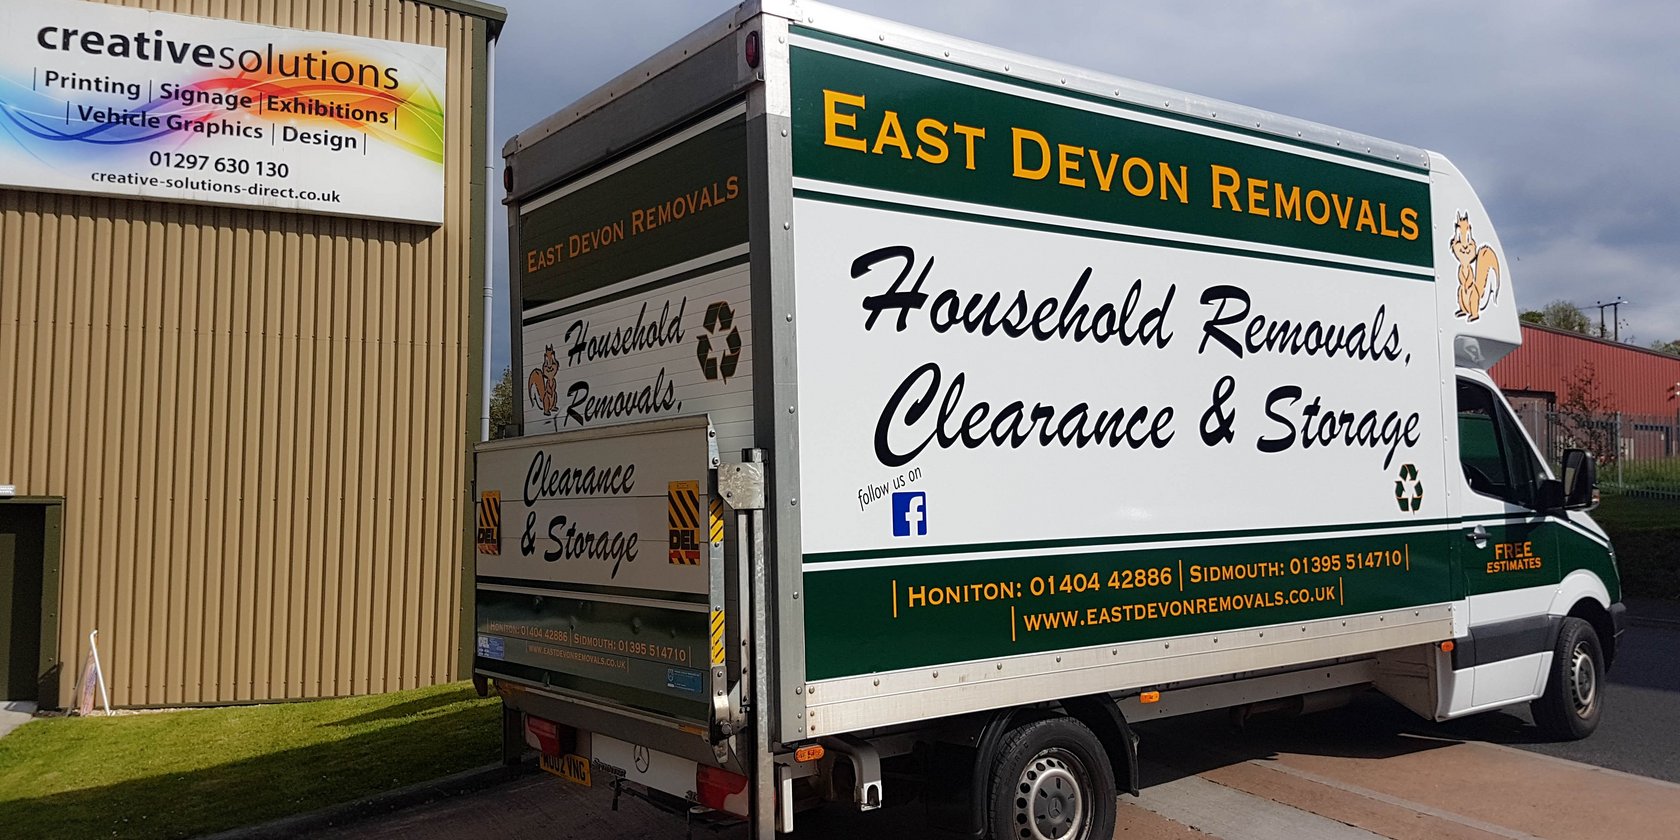 East Devon Removals Vehicle Graphics